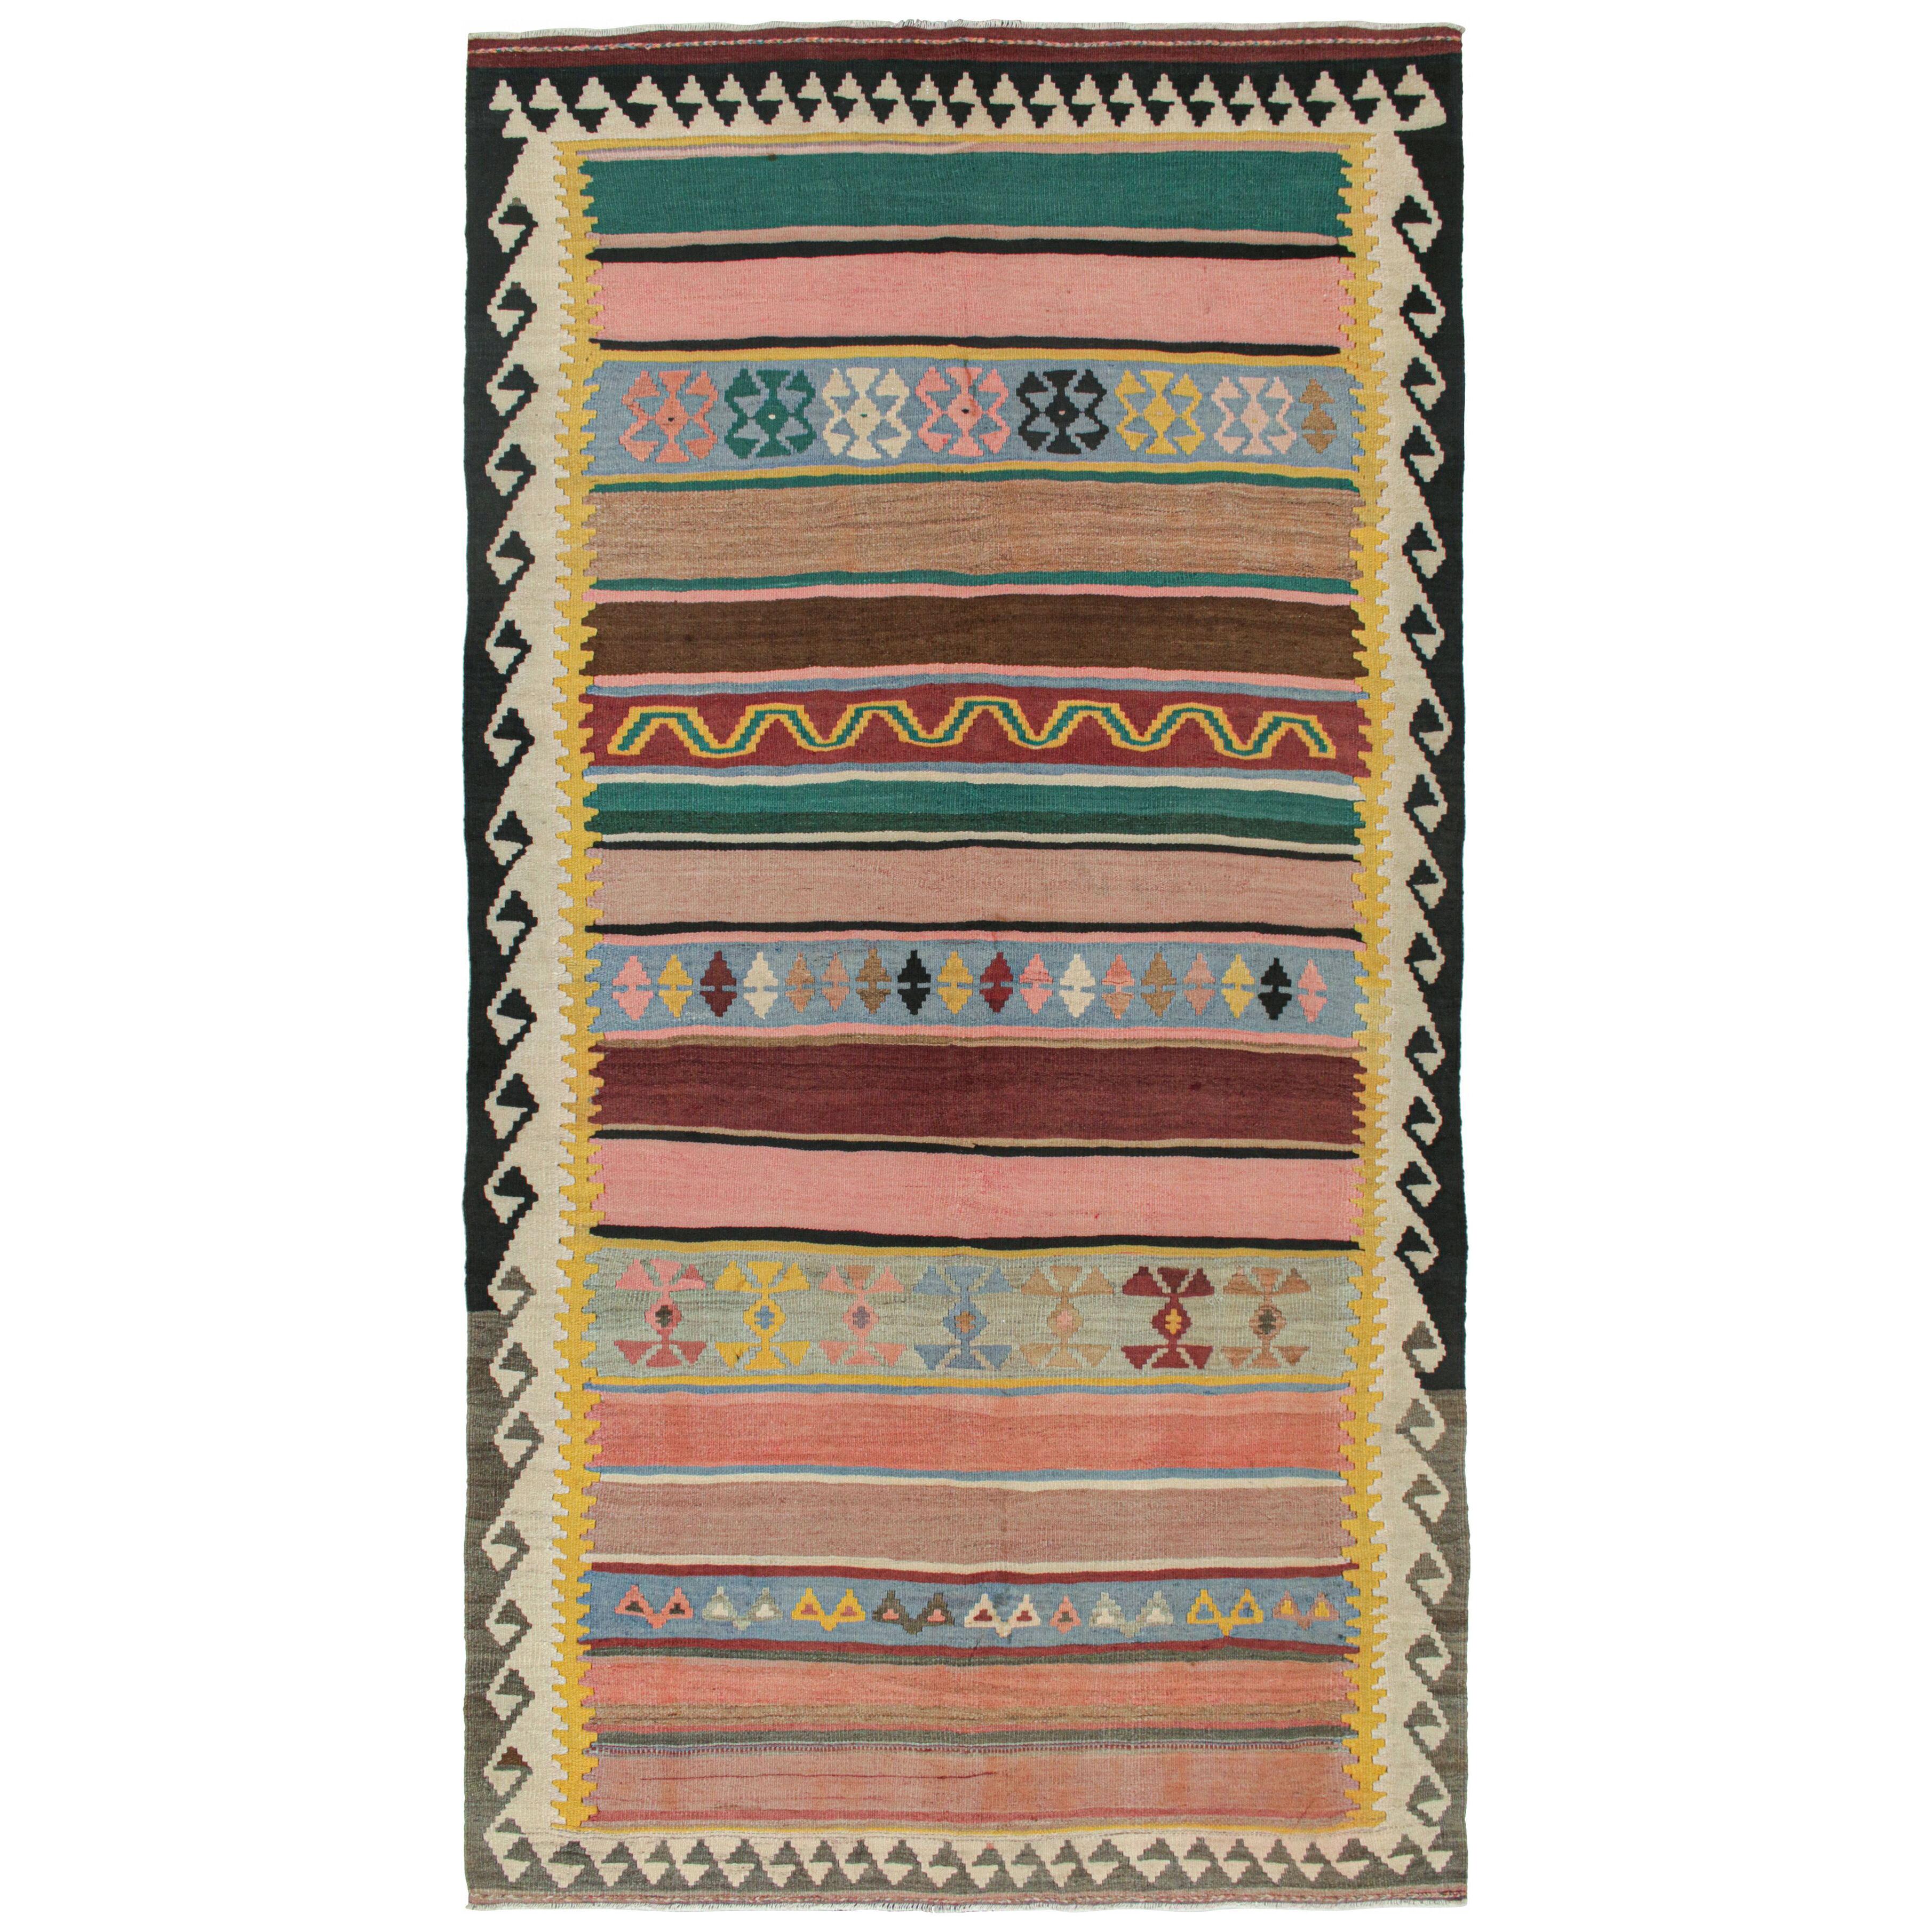 Vintage Shahsavan Persian Kilim in Stripes and Geometric Patterns by Rug & Kilim